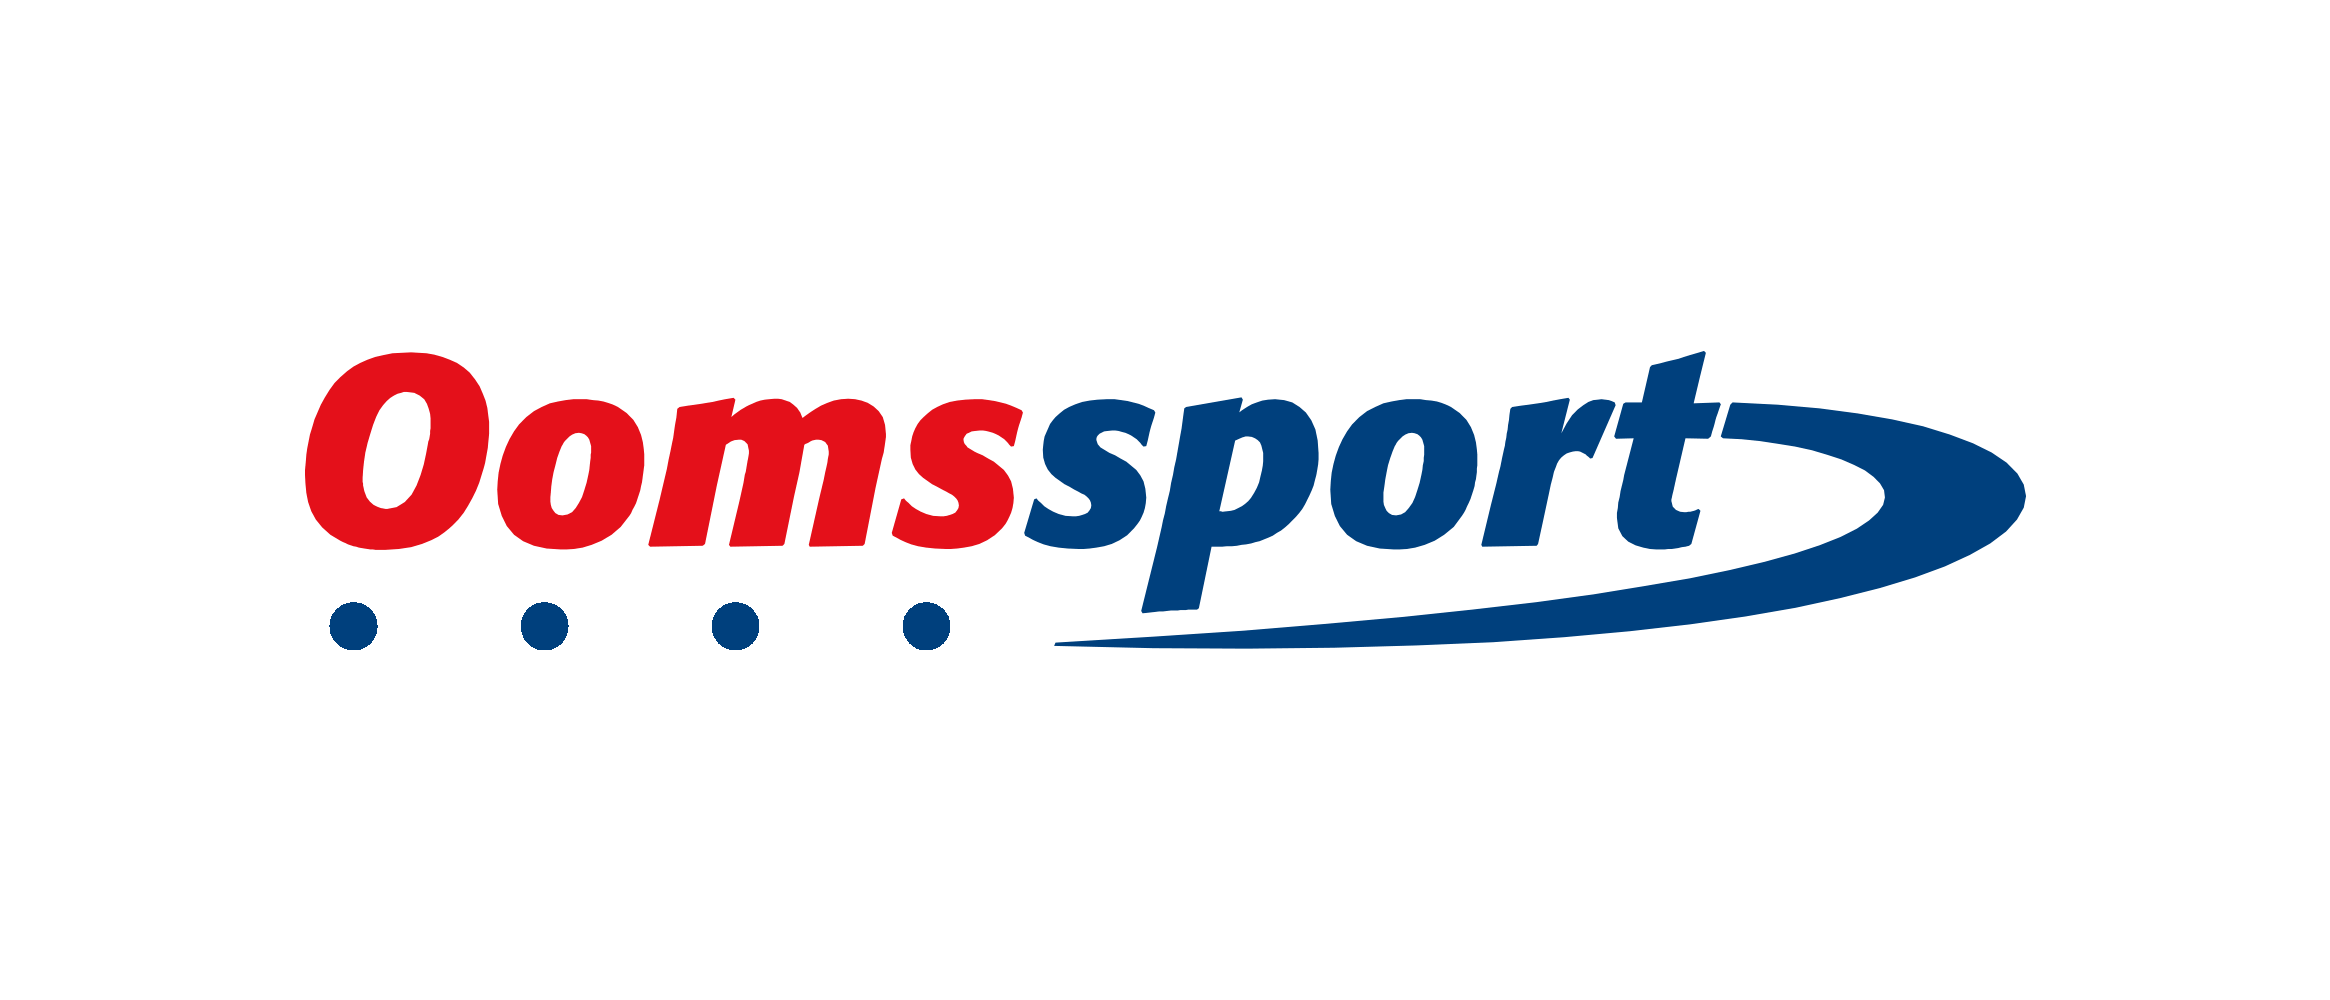 Oomssport.nl